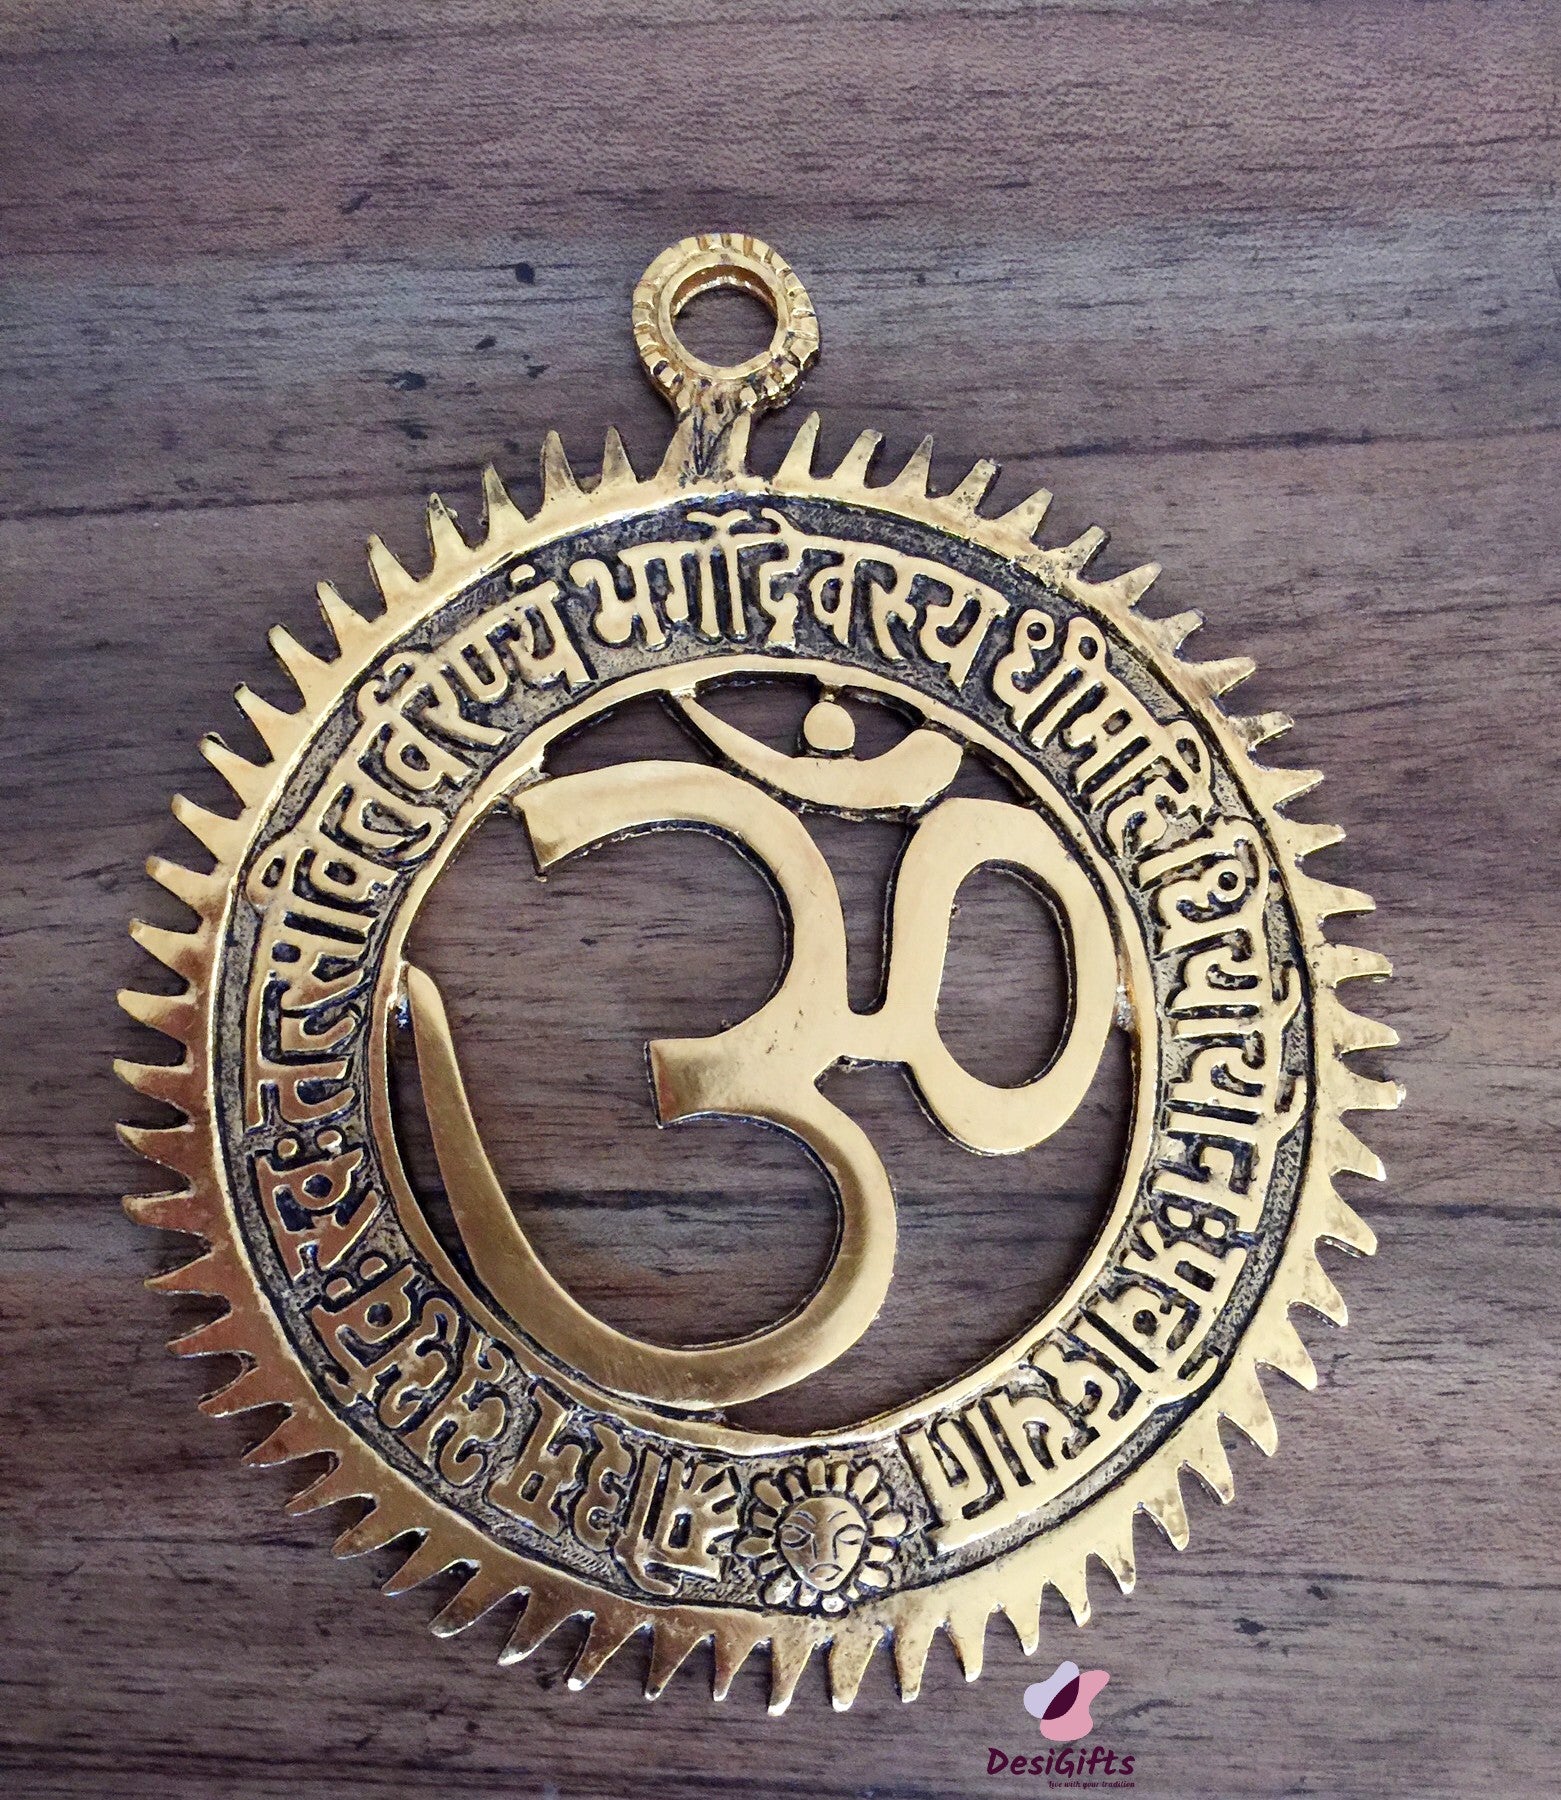 Om Gayatri Mantra Hanging, 8" & 5.5", OMM#125